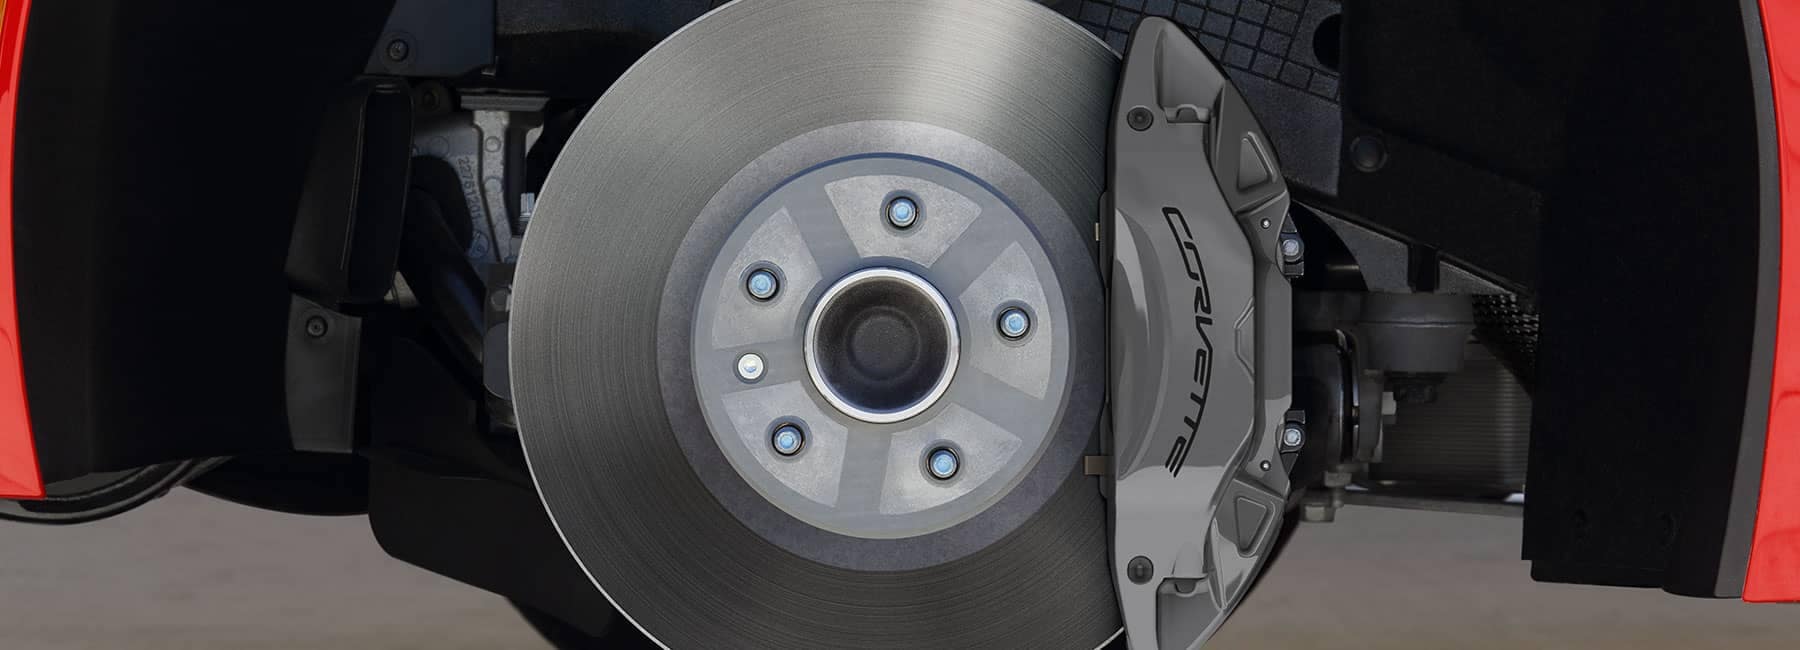 2019 Chevrolet Parts banner image of a Corvette break disk